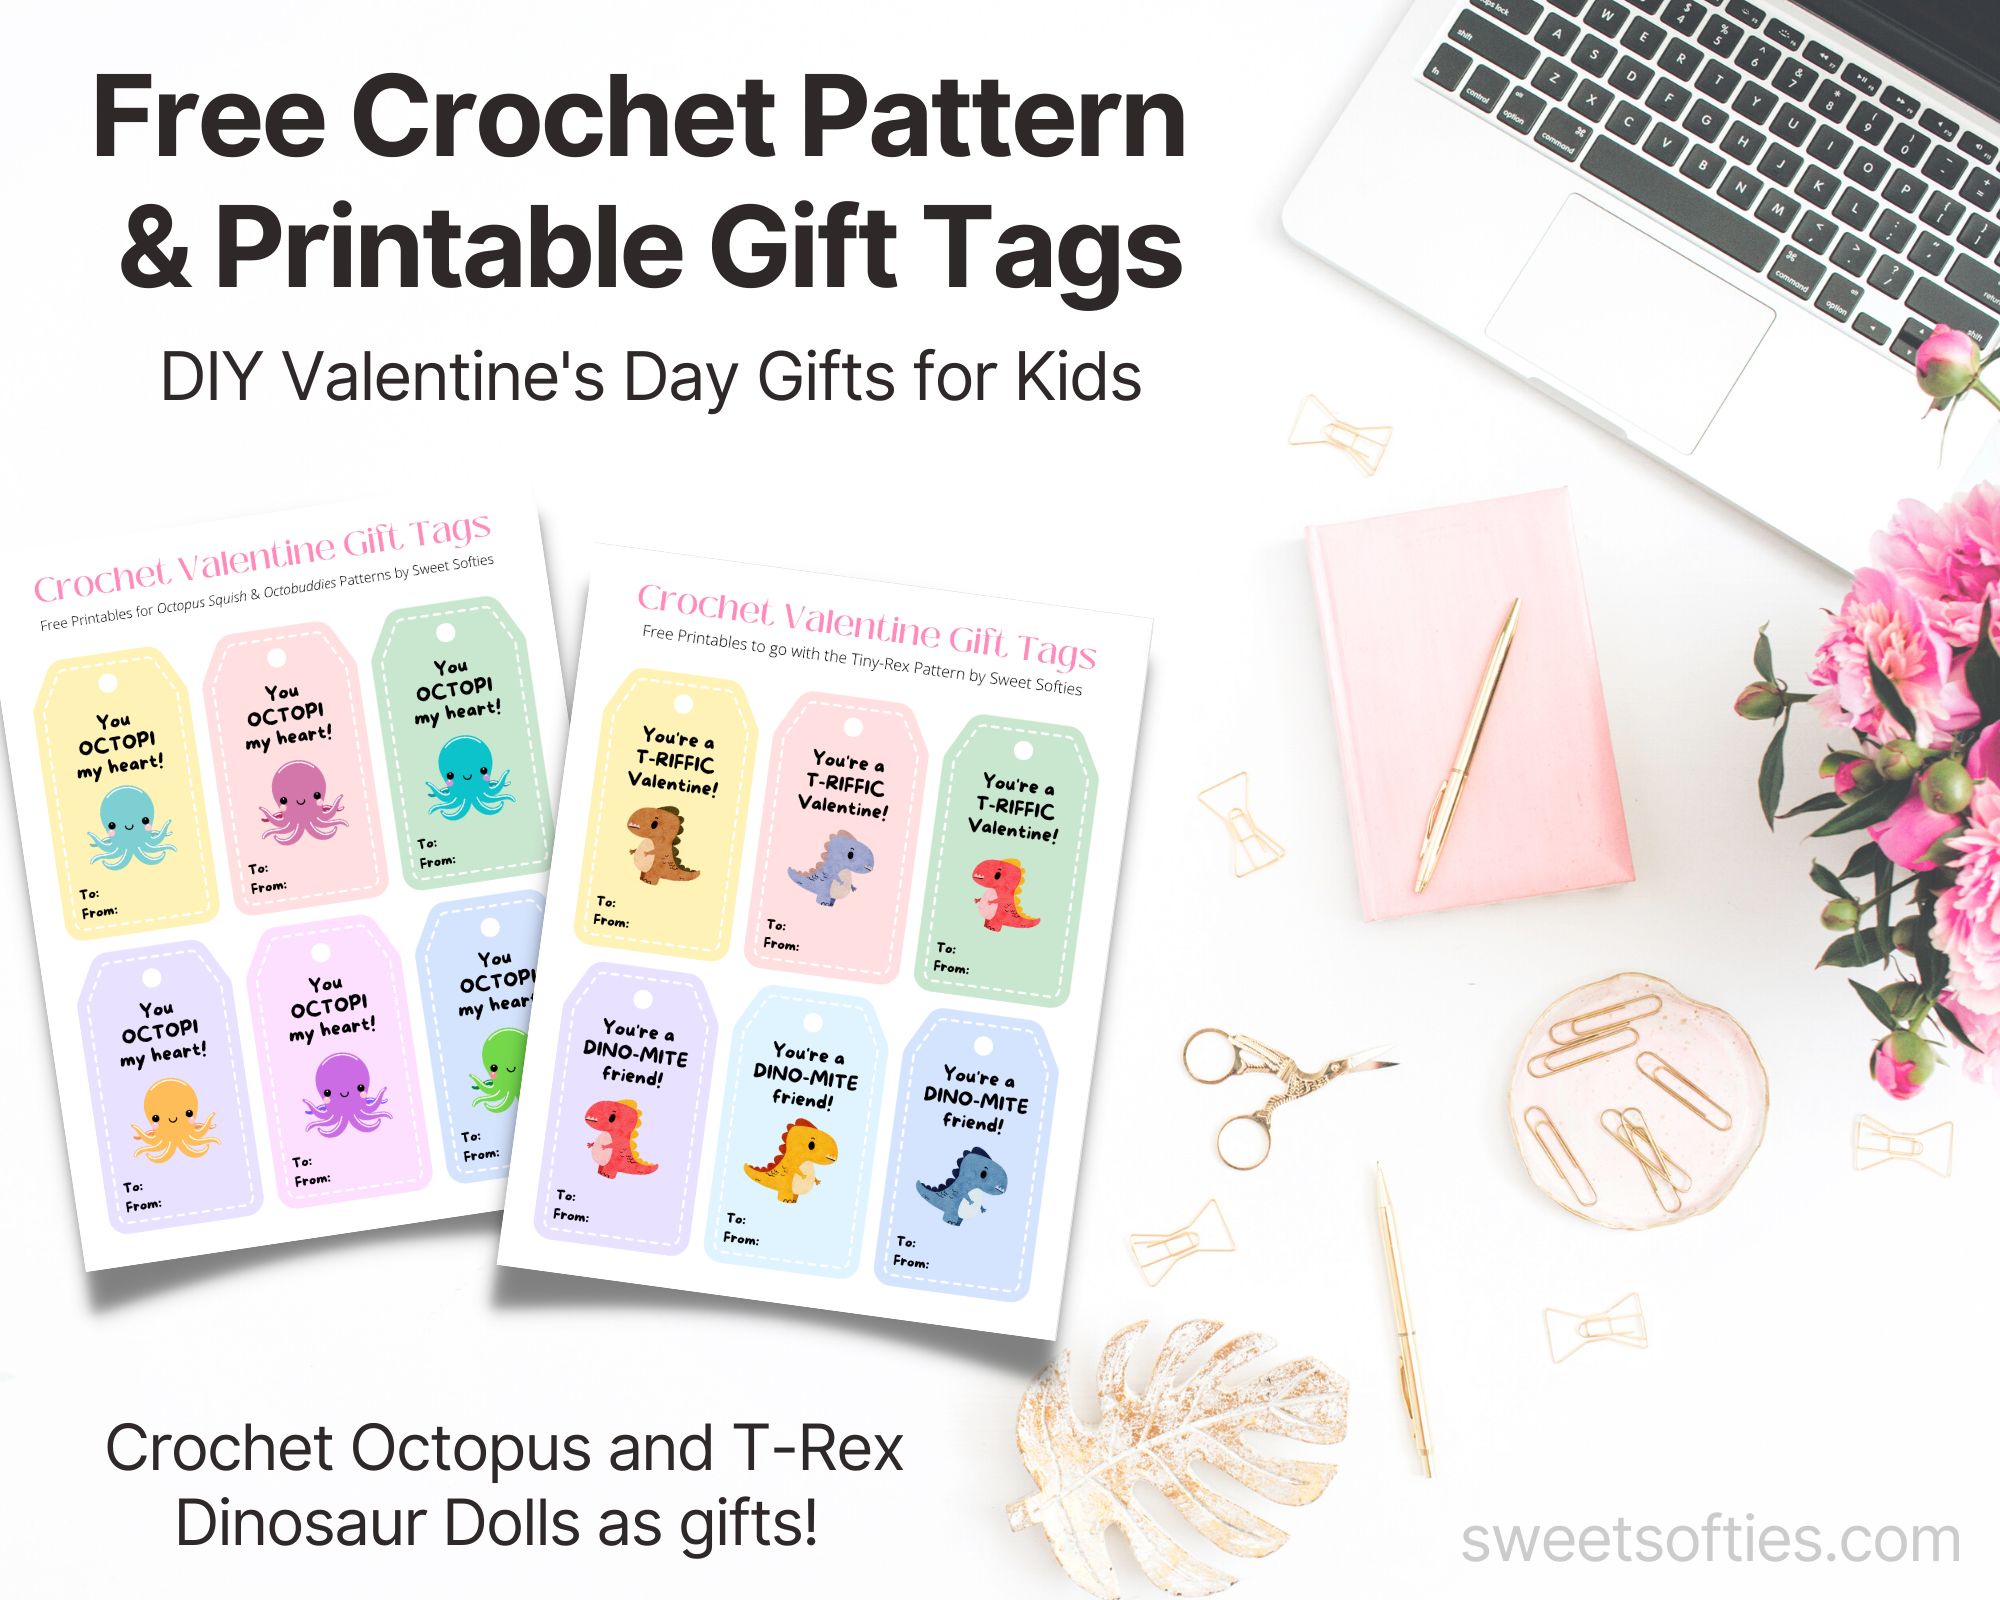 Lola Hair Clip · Easy & Free Crochet Pattern - Sweet Softies